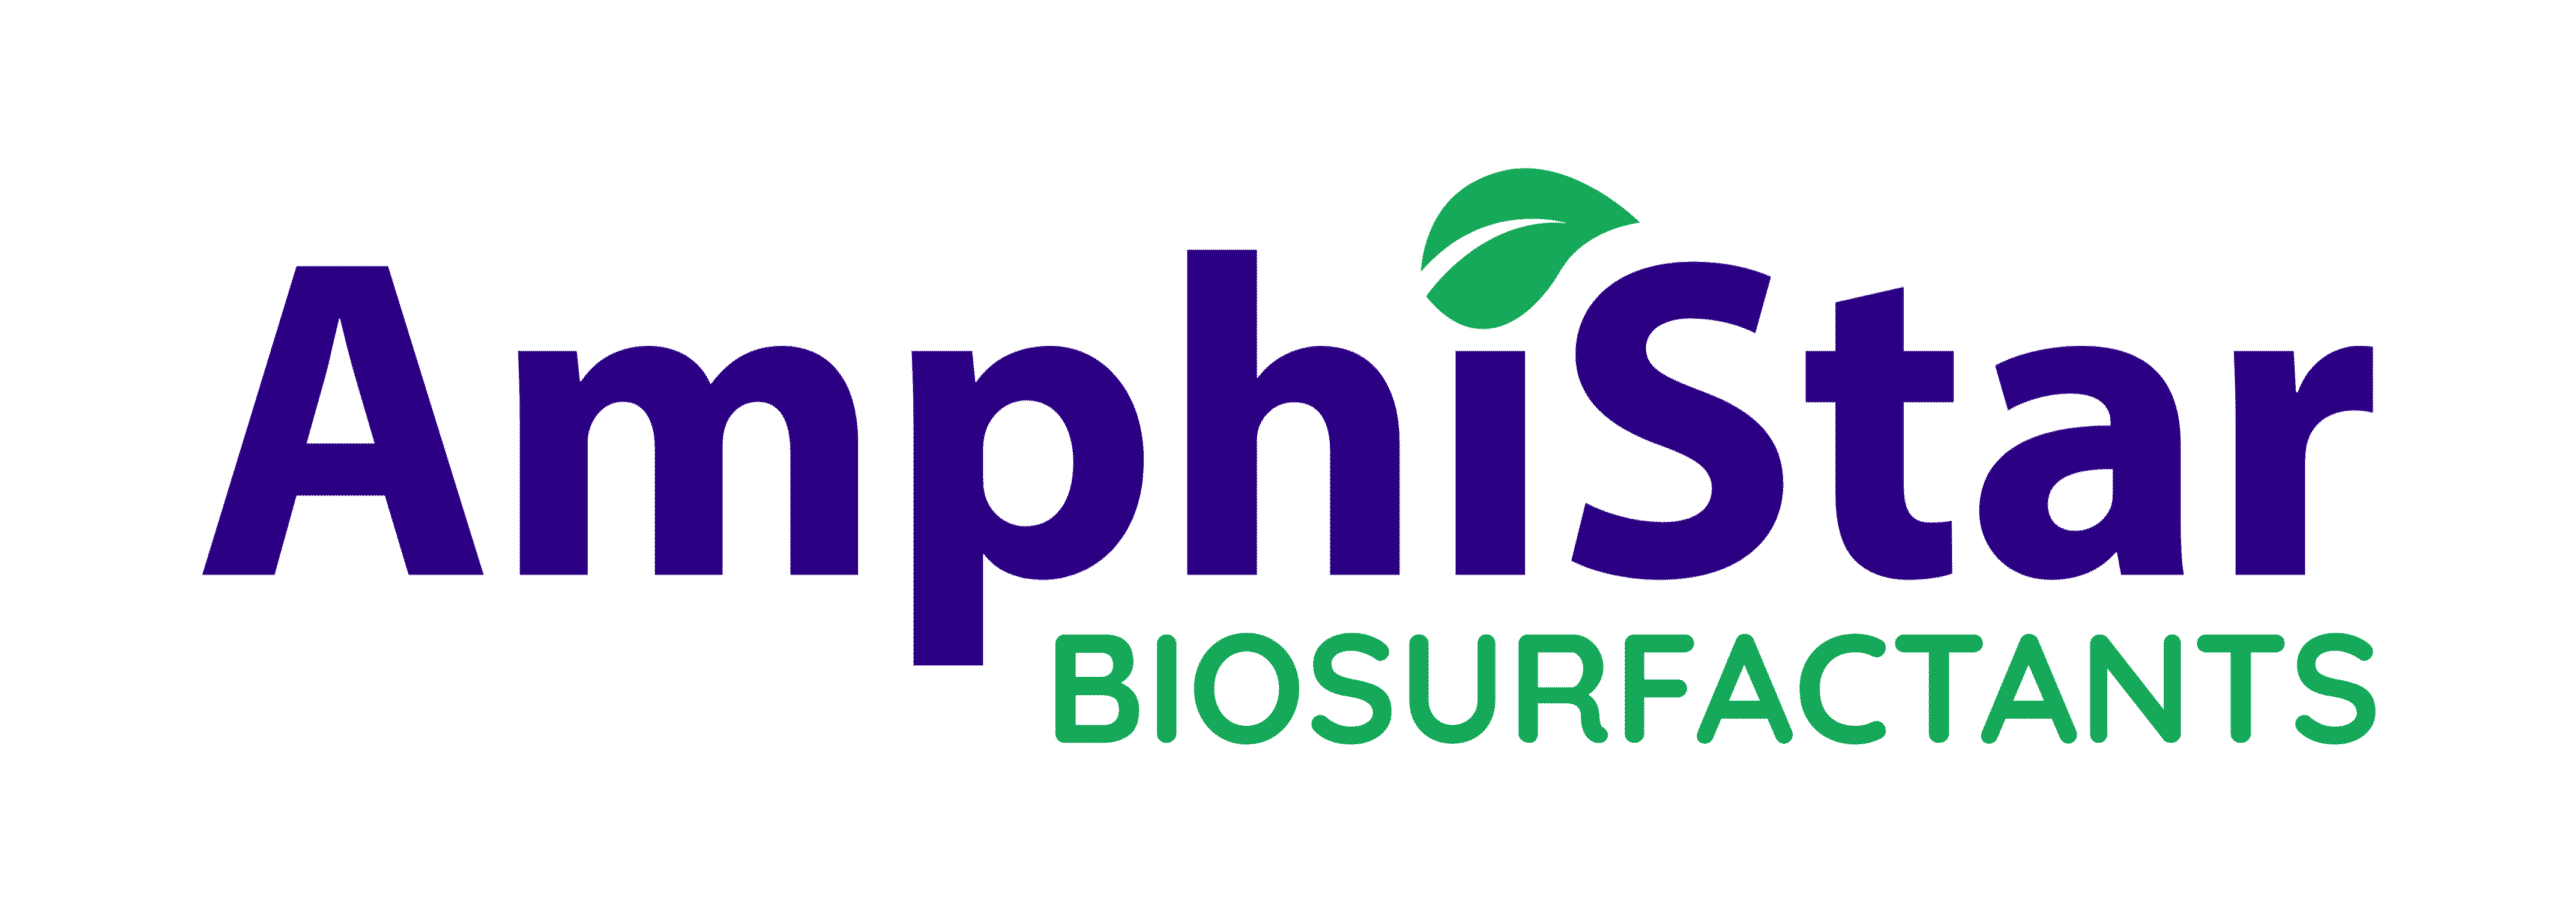 AmphiStar-logo-transparent-crop